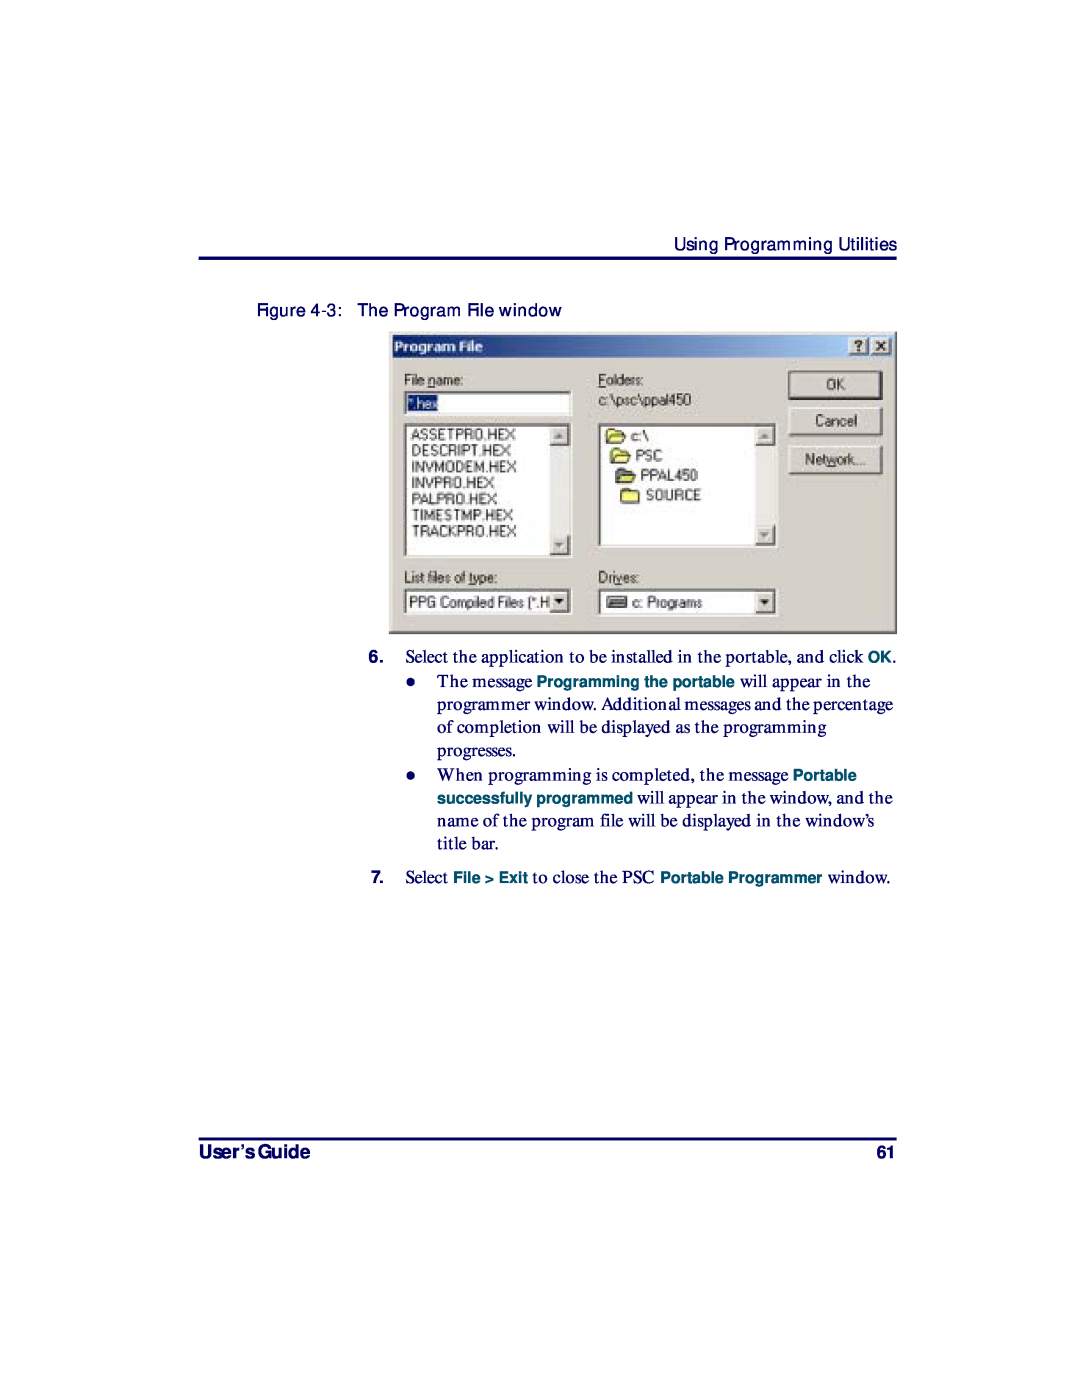 PSC PT2000, TopGun manual progresses, User’s Guide, Using Programming Utilities -3 The Program File window 